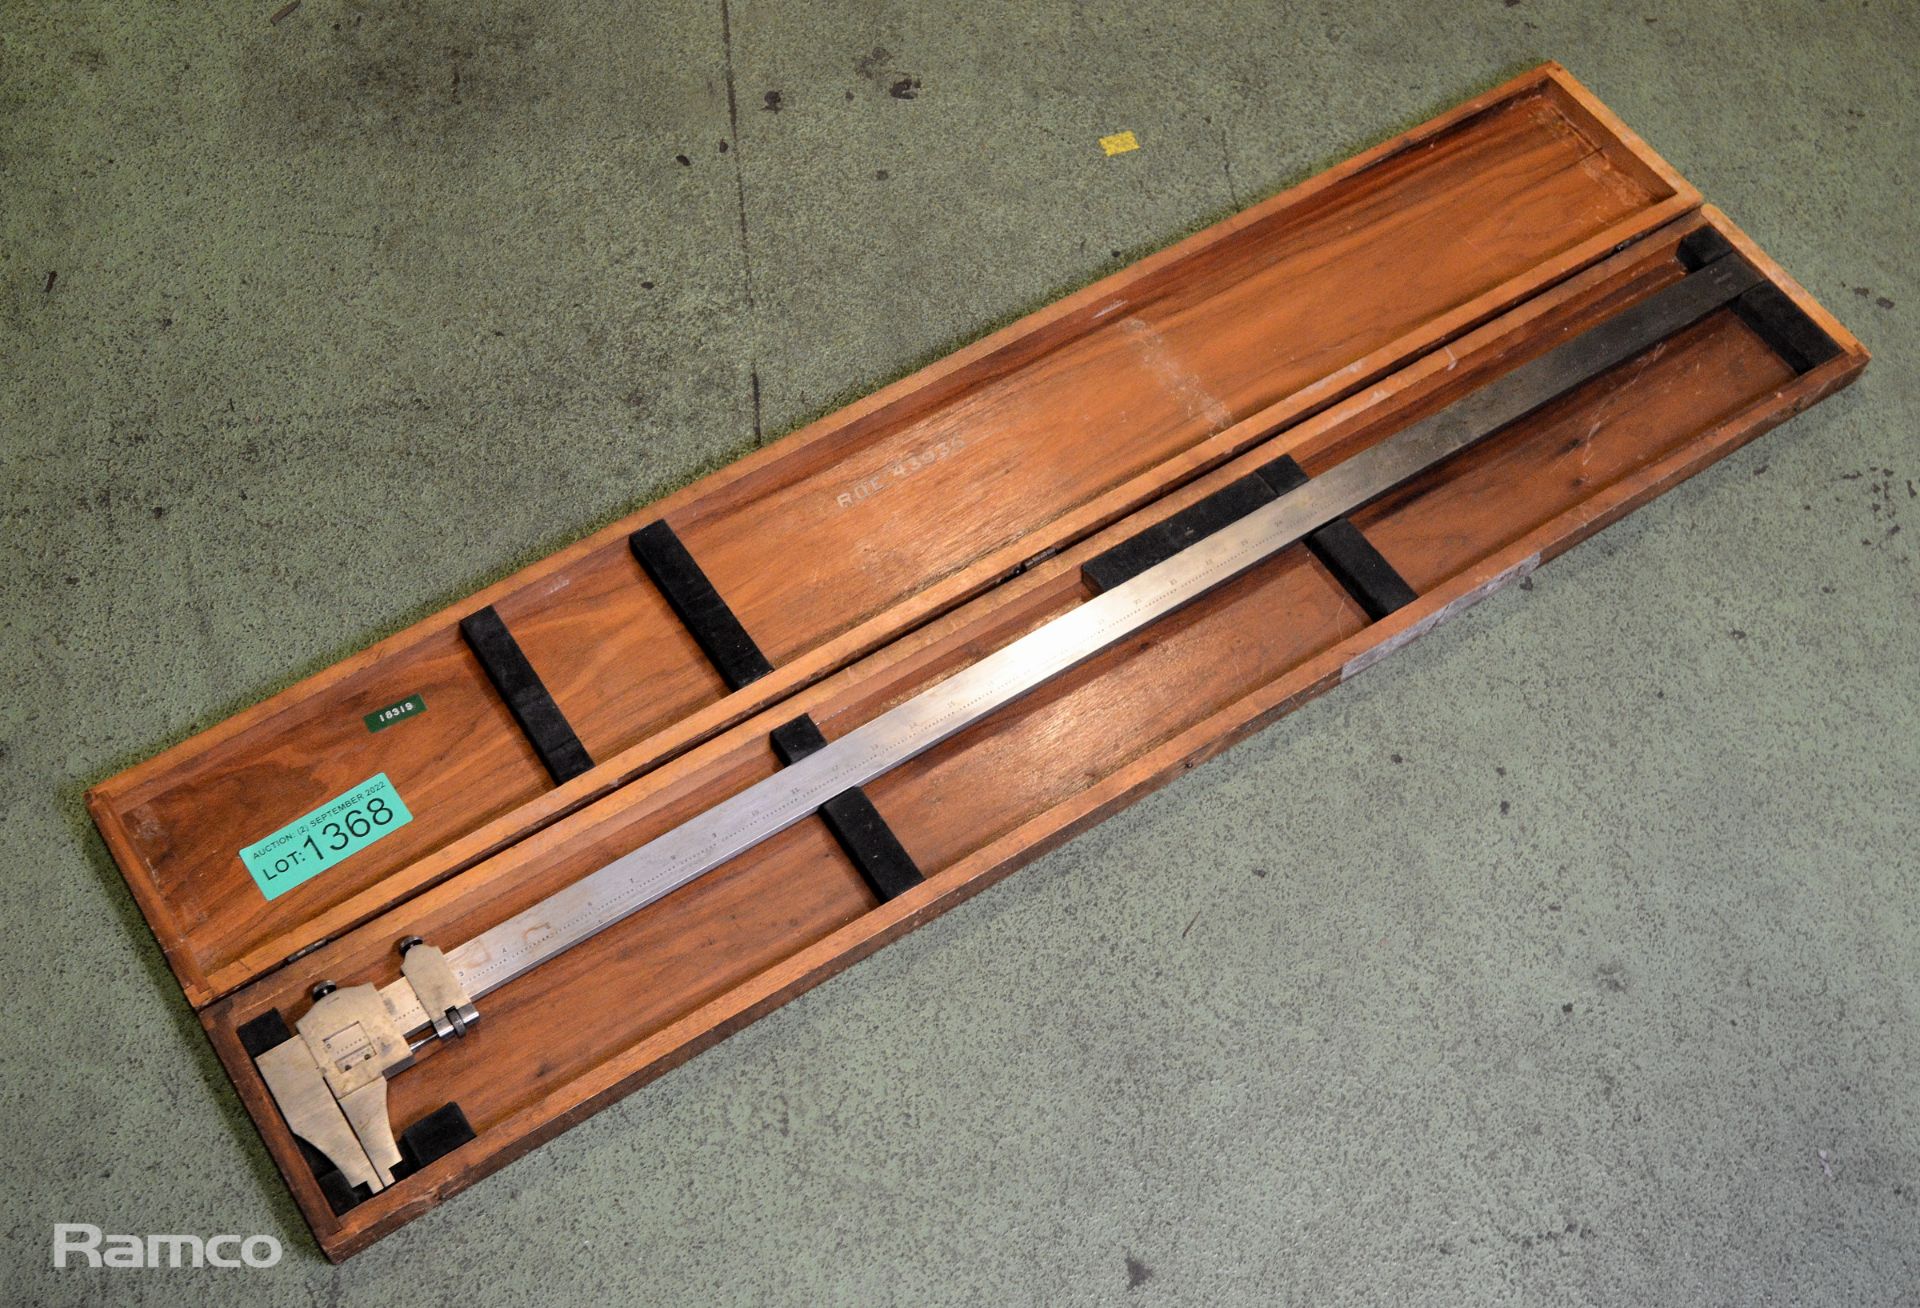 Brown & Sharpe Mfg Co. 37 inch Vernier Caliper in Wooden Case